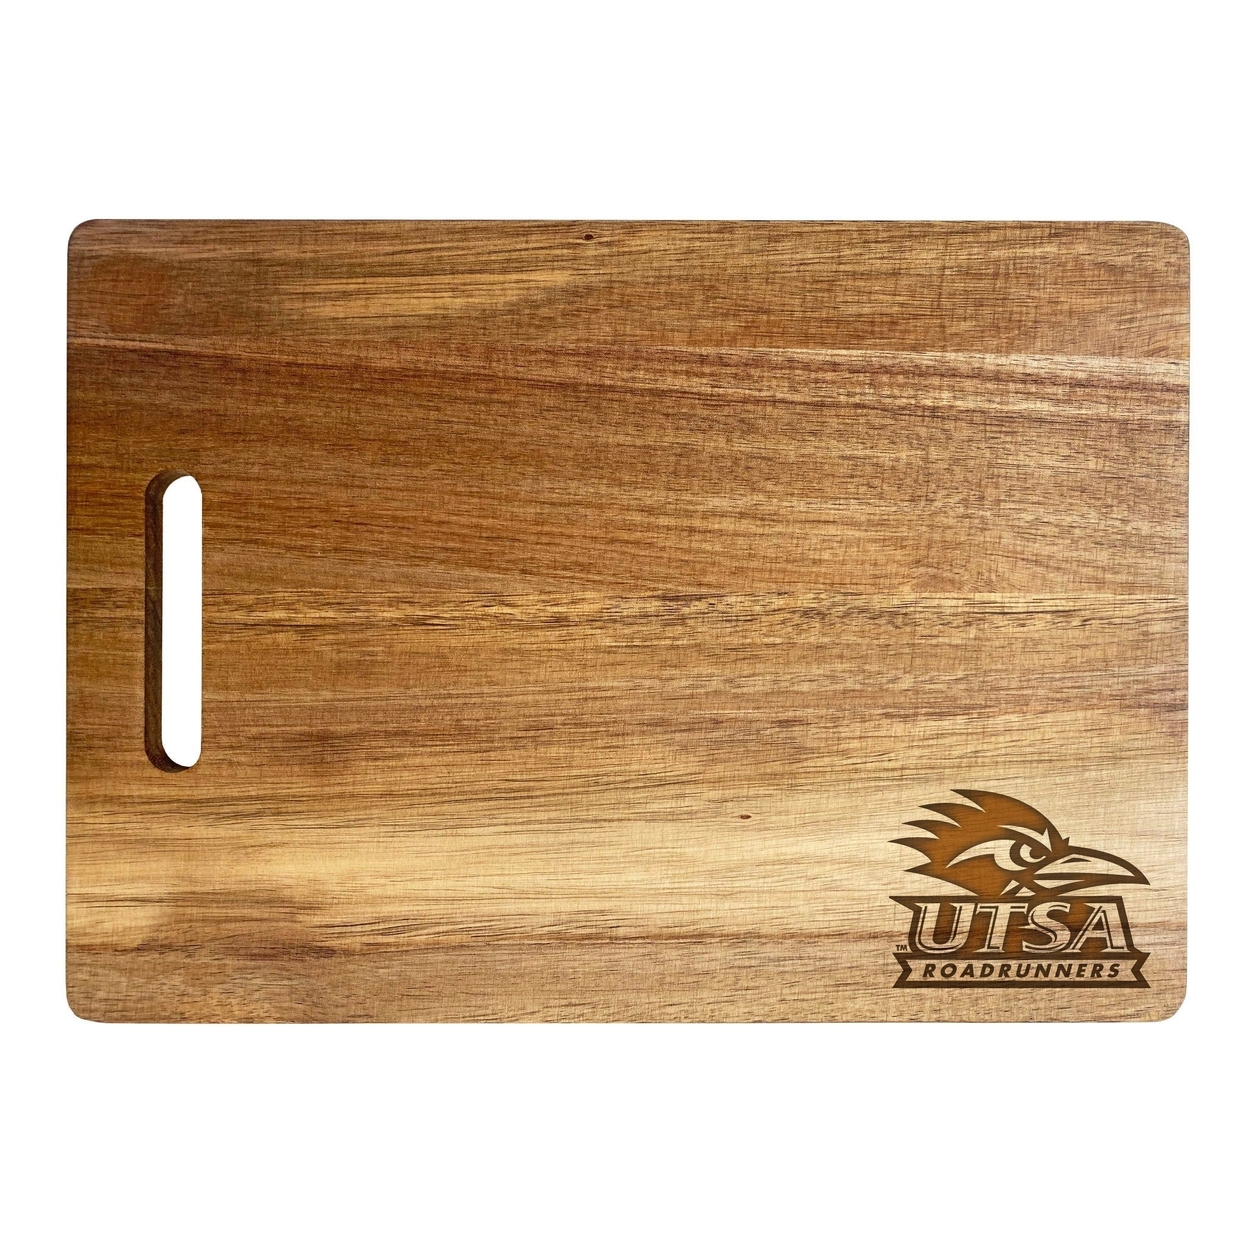 UTSA Road Runners Engraved Wooden Cutting Board 10 X 14 Acacia Wood - Small Engraving